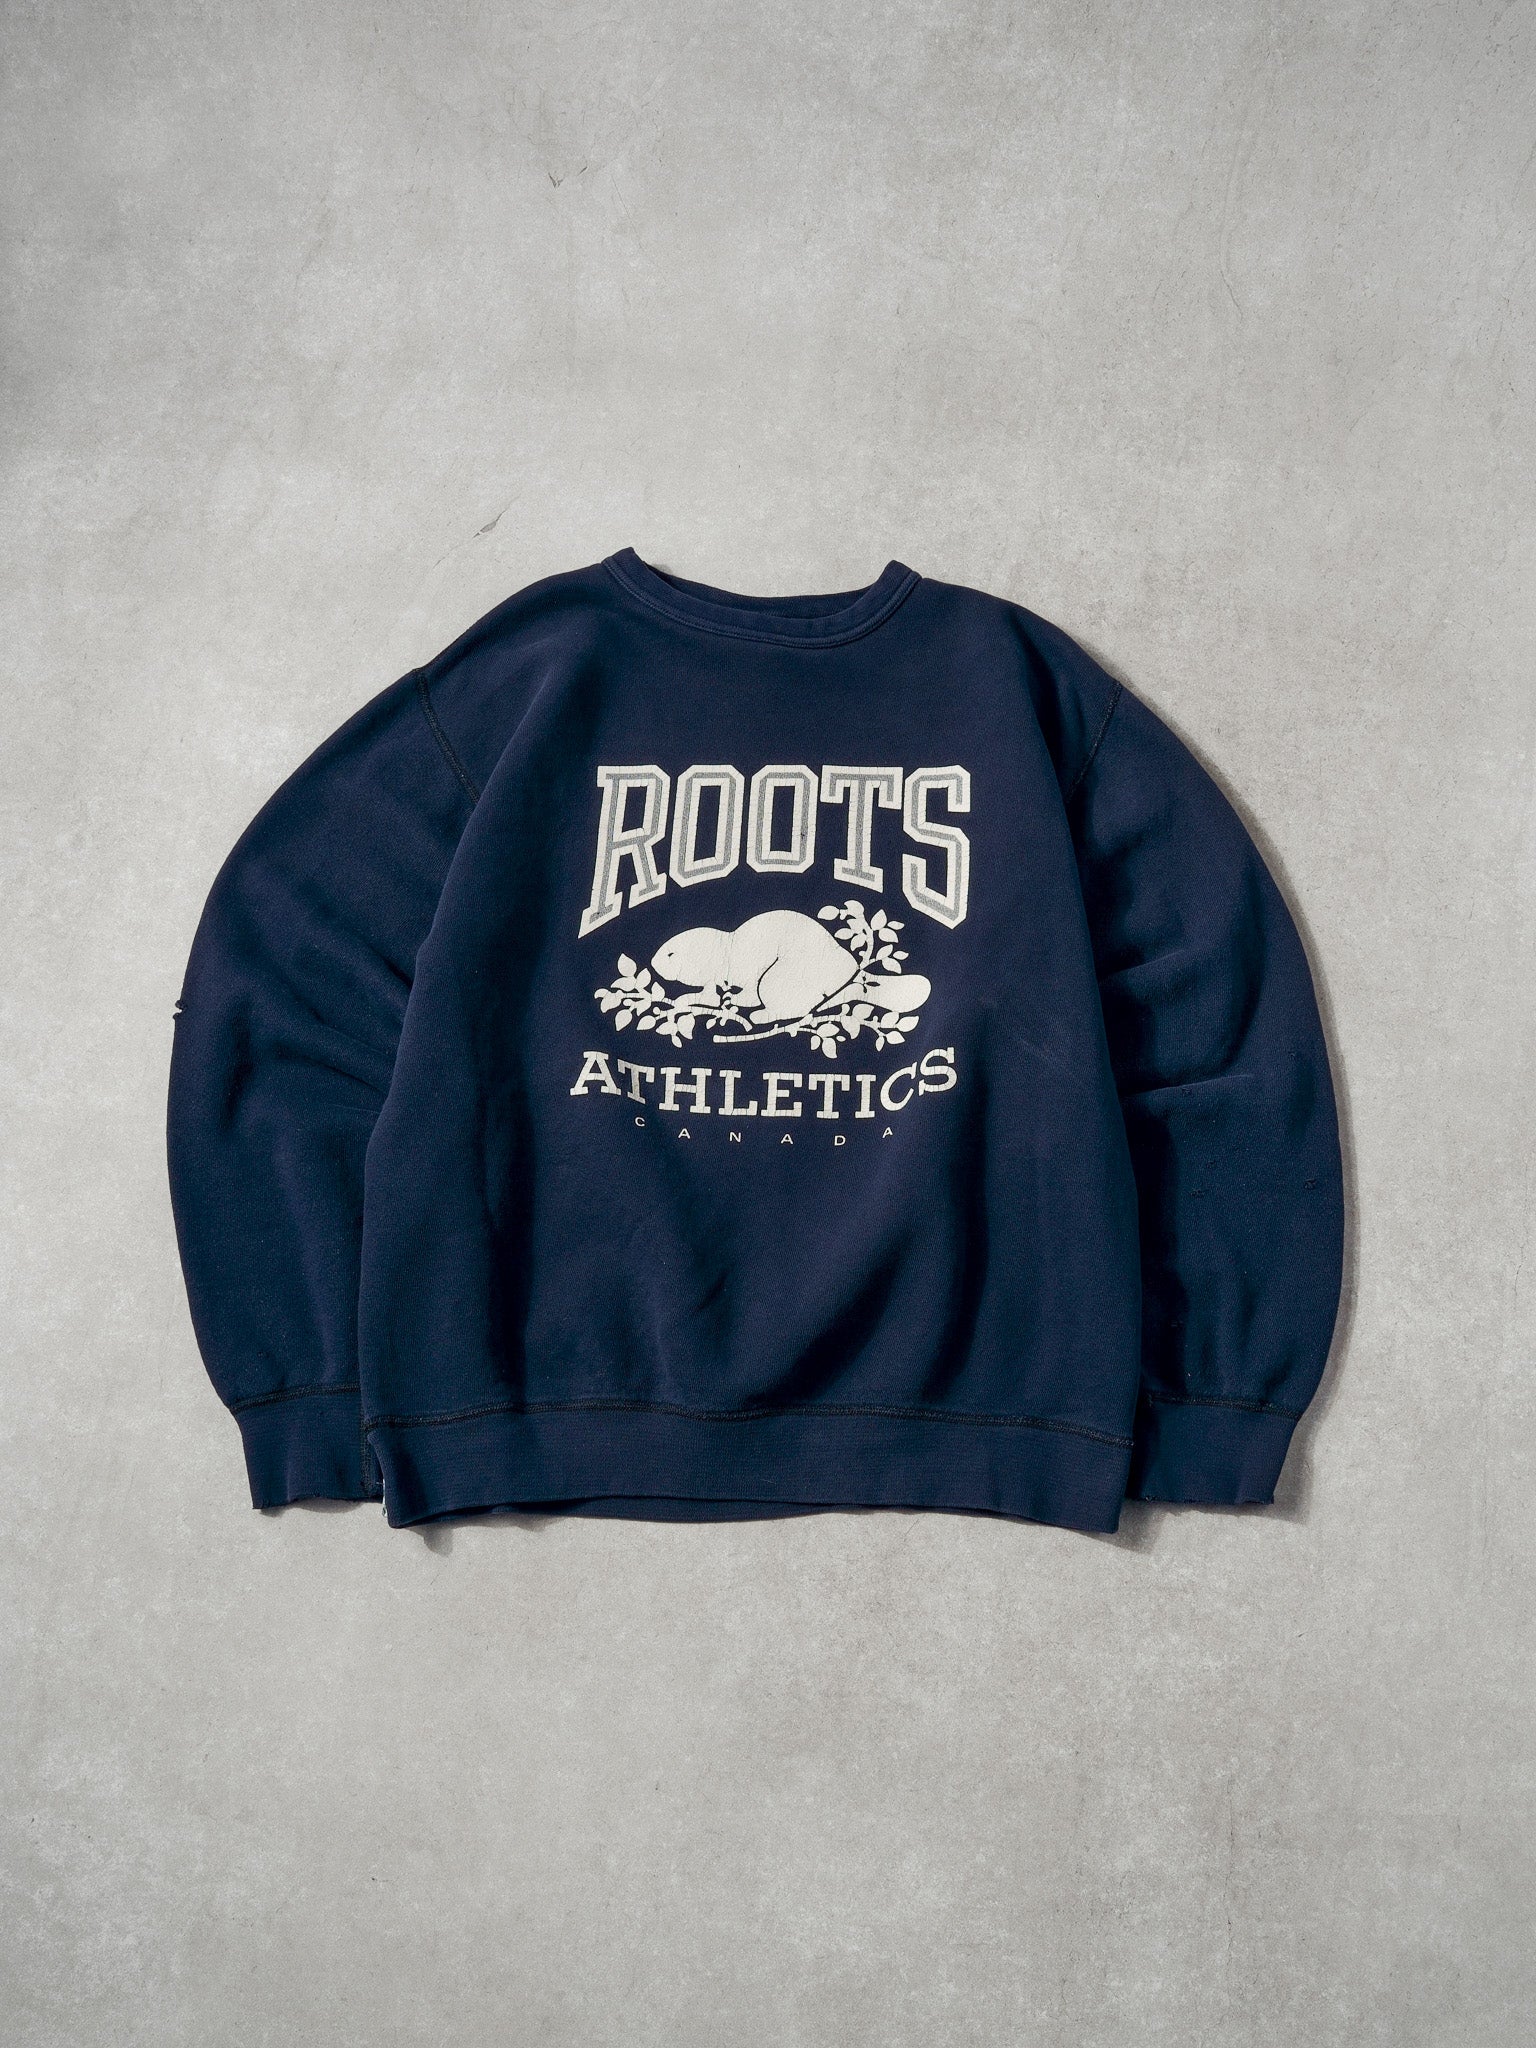 Vintage 90s Navy Blue Roots Athletics Crewneck (M)